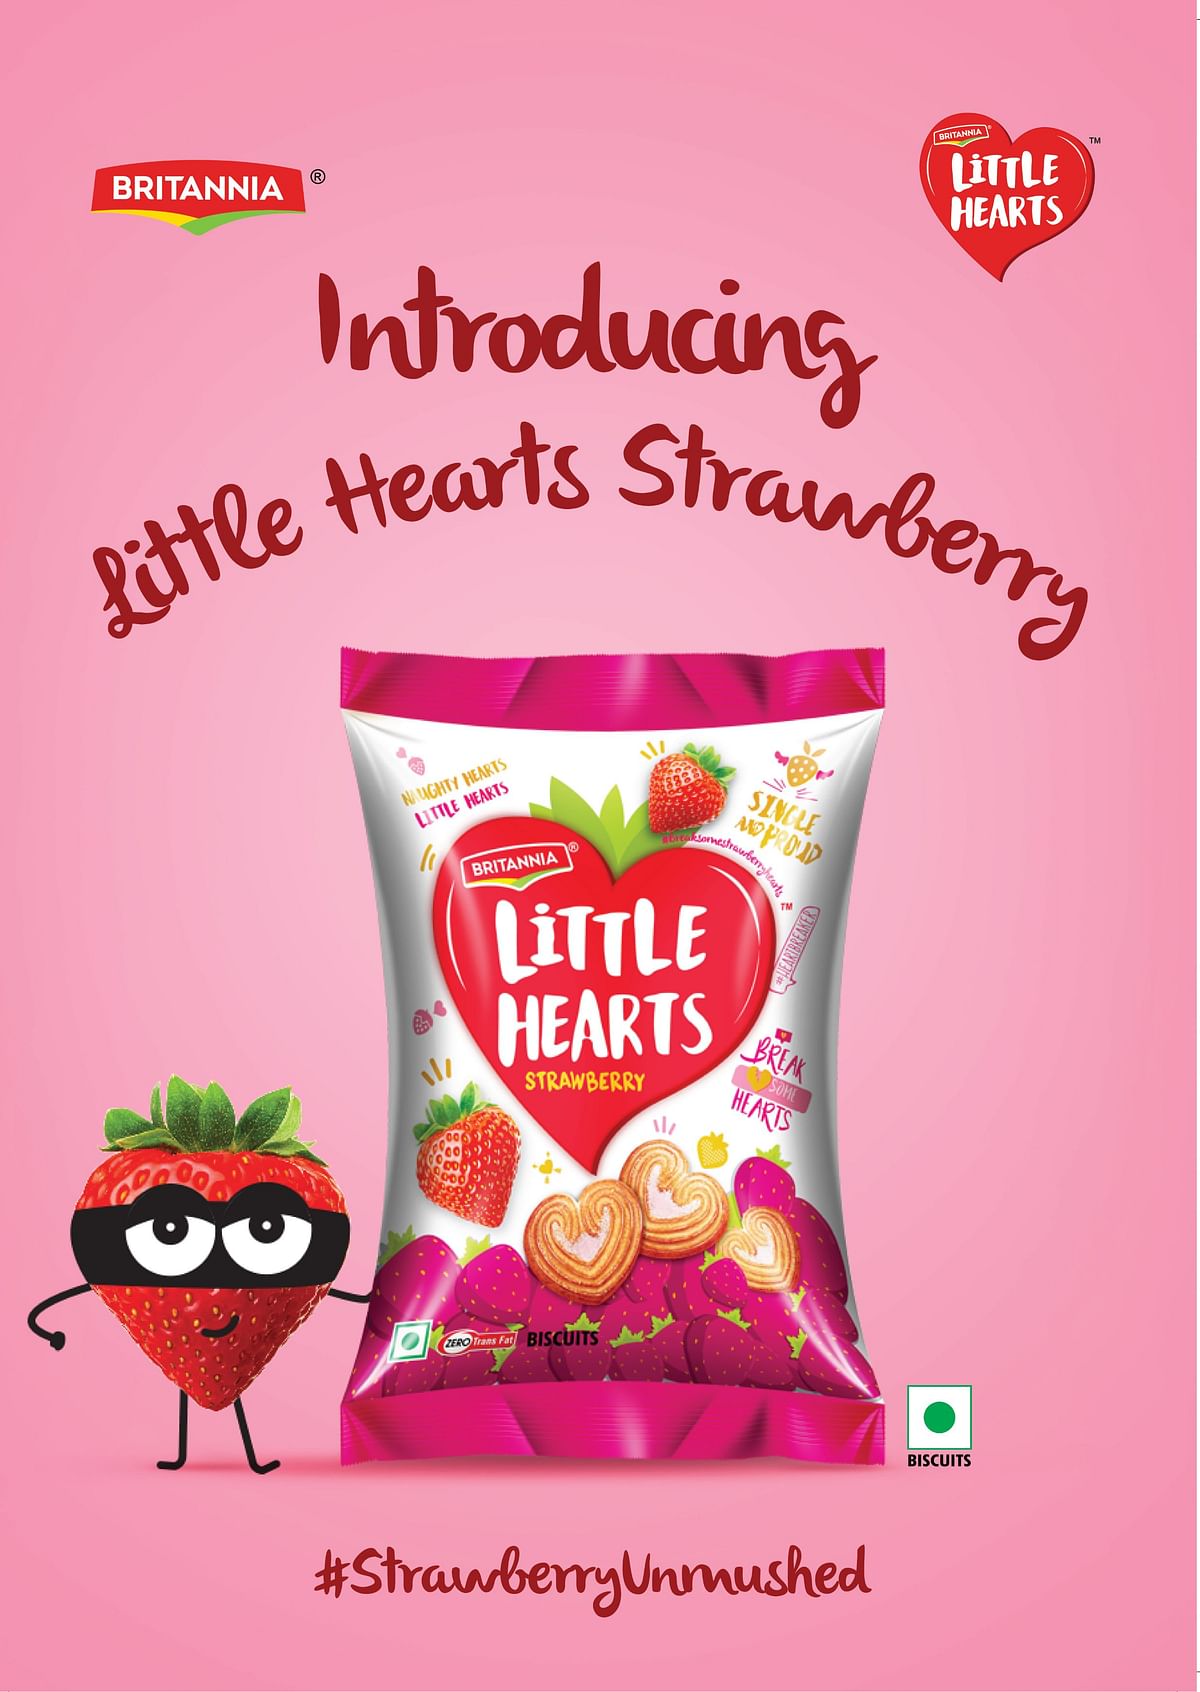 Britannia gets 'Ninja' to push Strawberry variant of Little Hearts